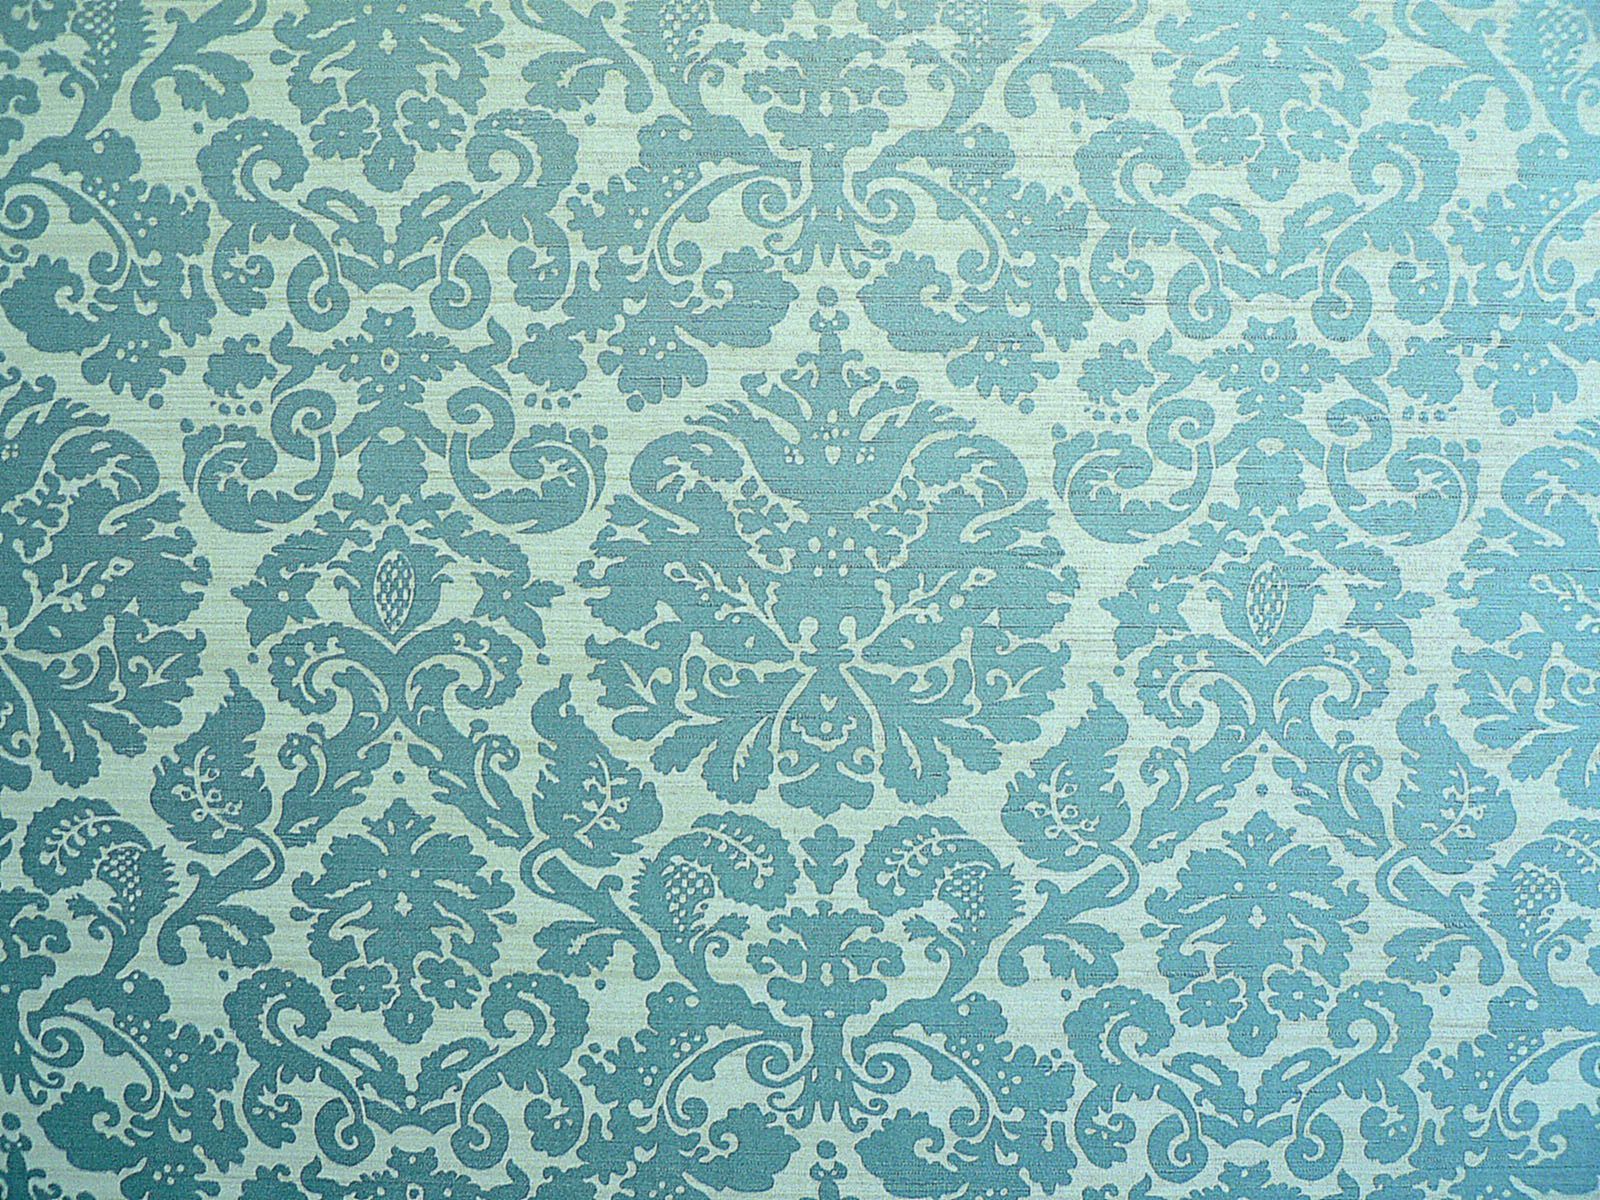 Historic wallpaper patterns